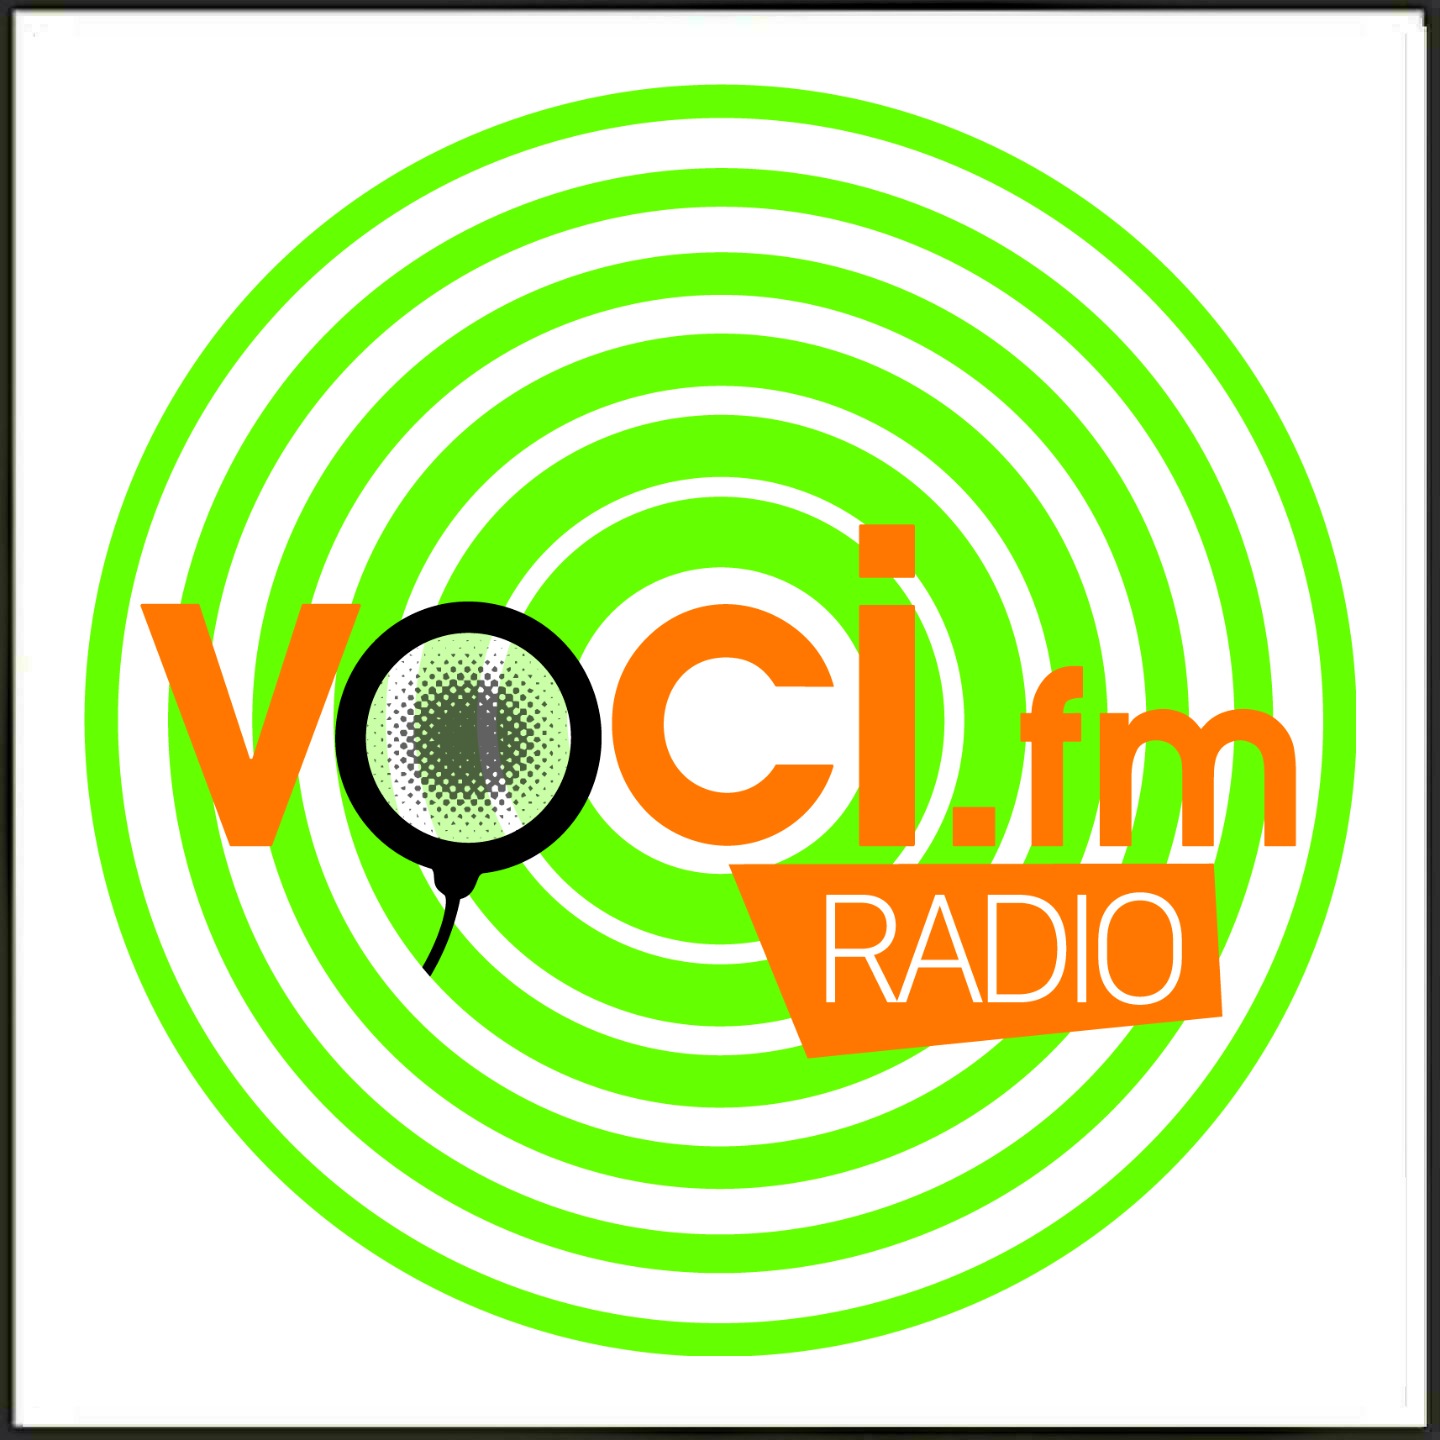 VOCI.FM RADIO